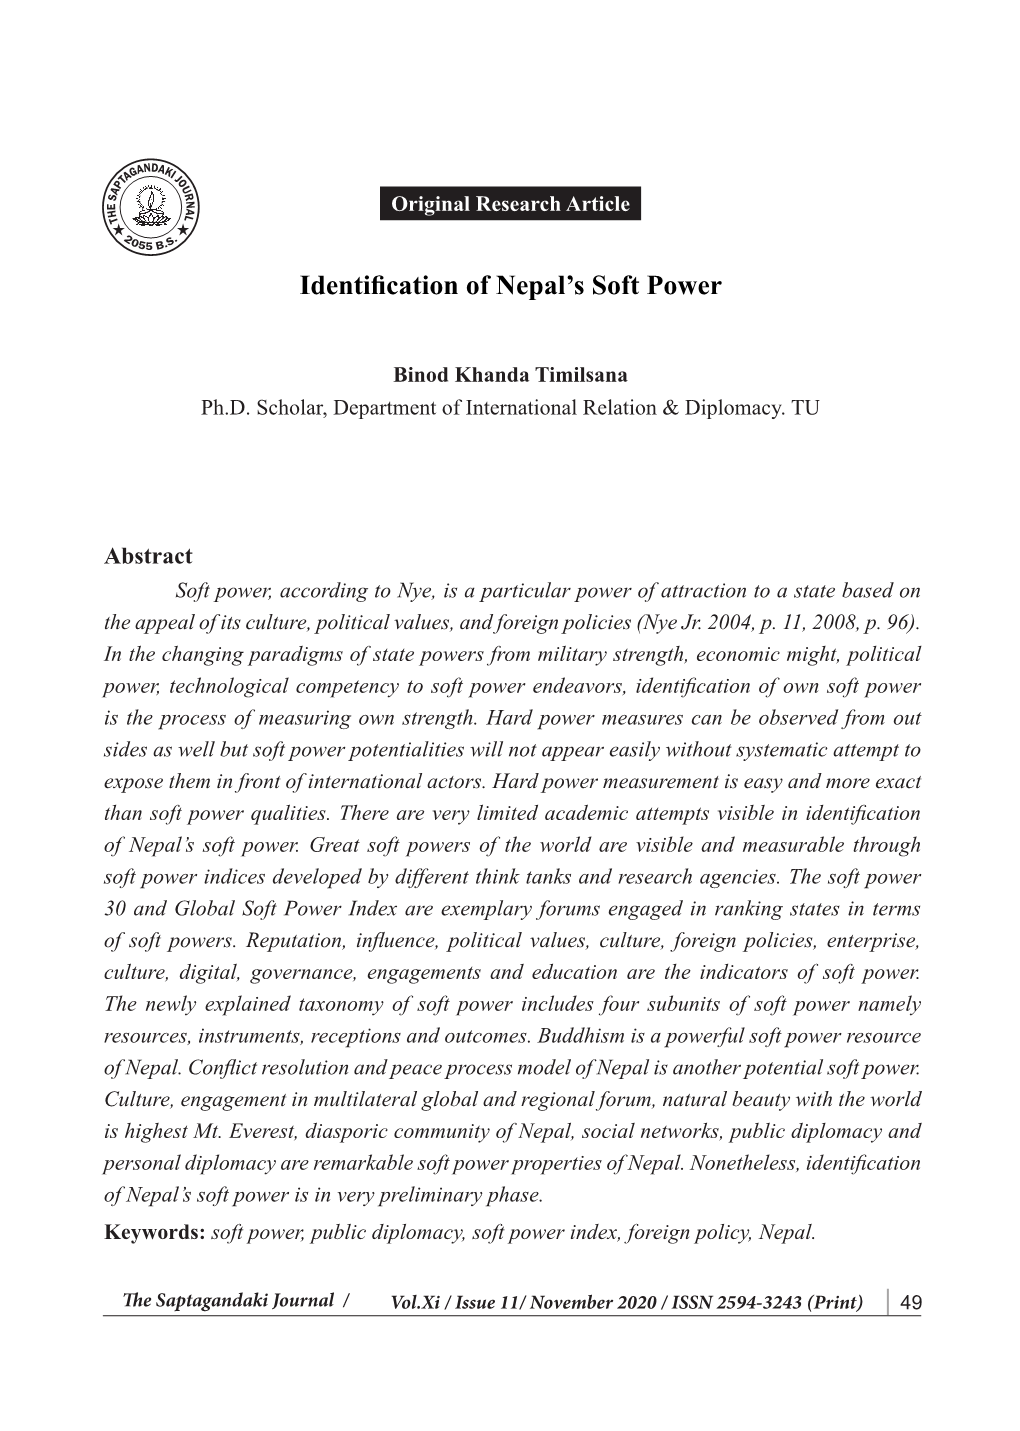 Identification of Nepal's Soft Power